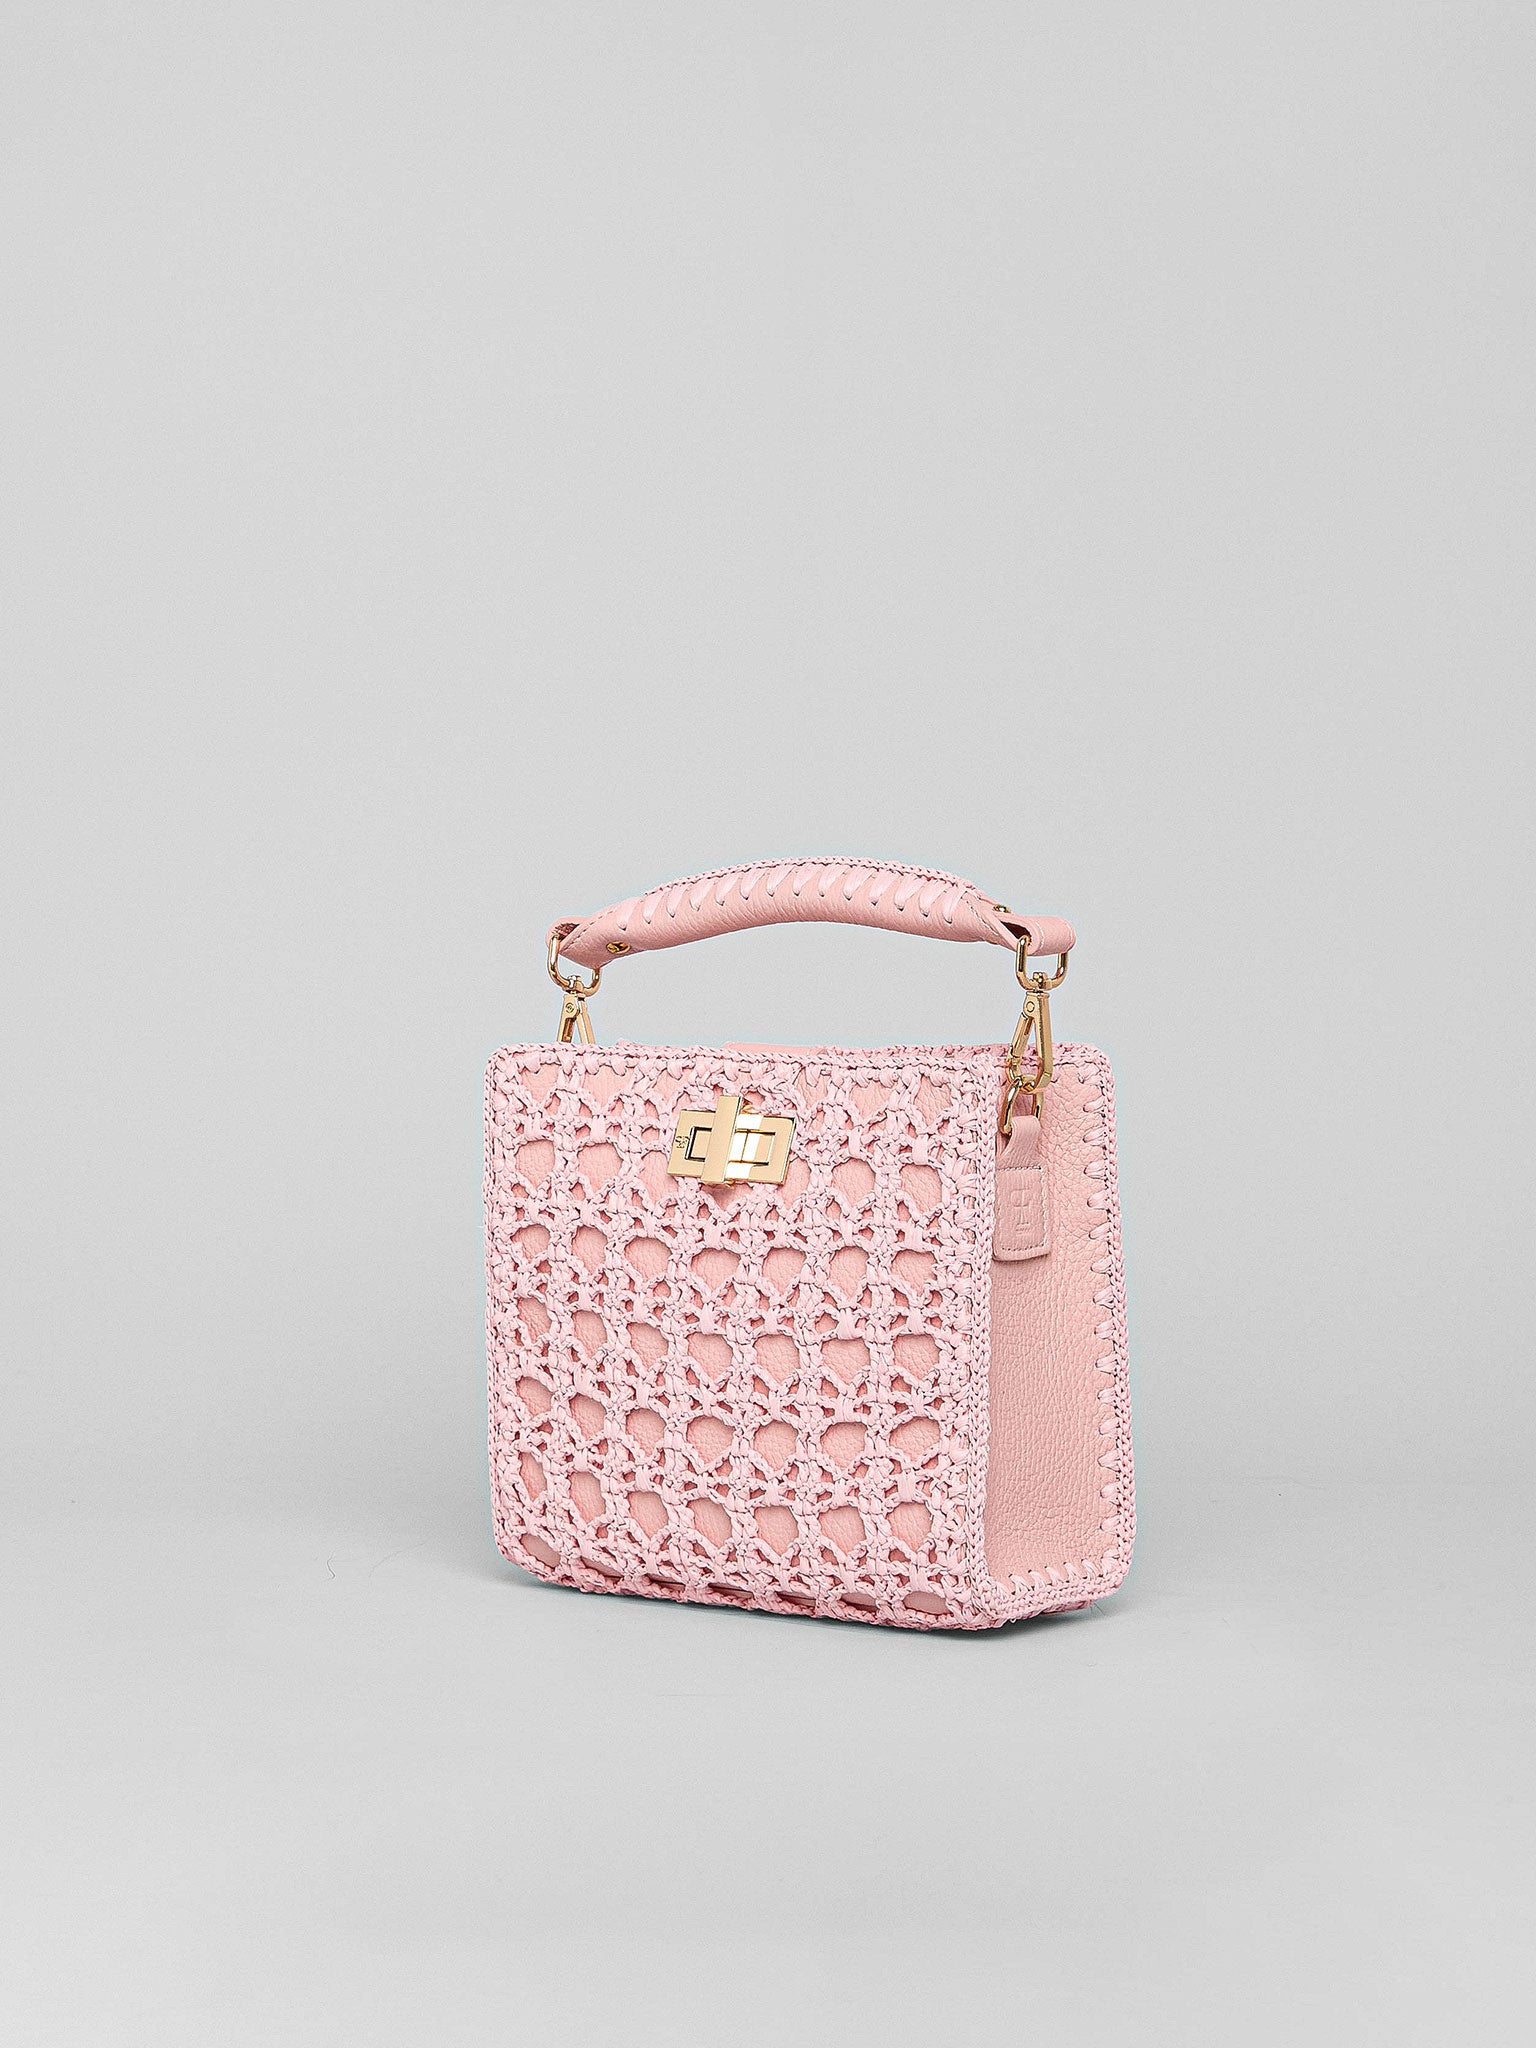 Sylvia Piccola Crochet Limited Edition Rosa